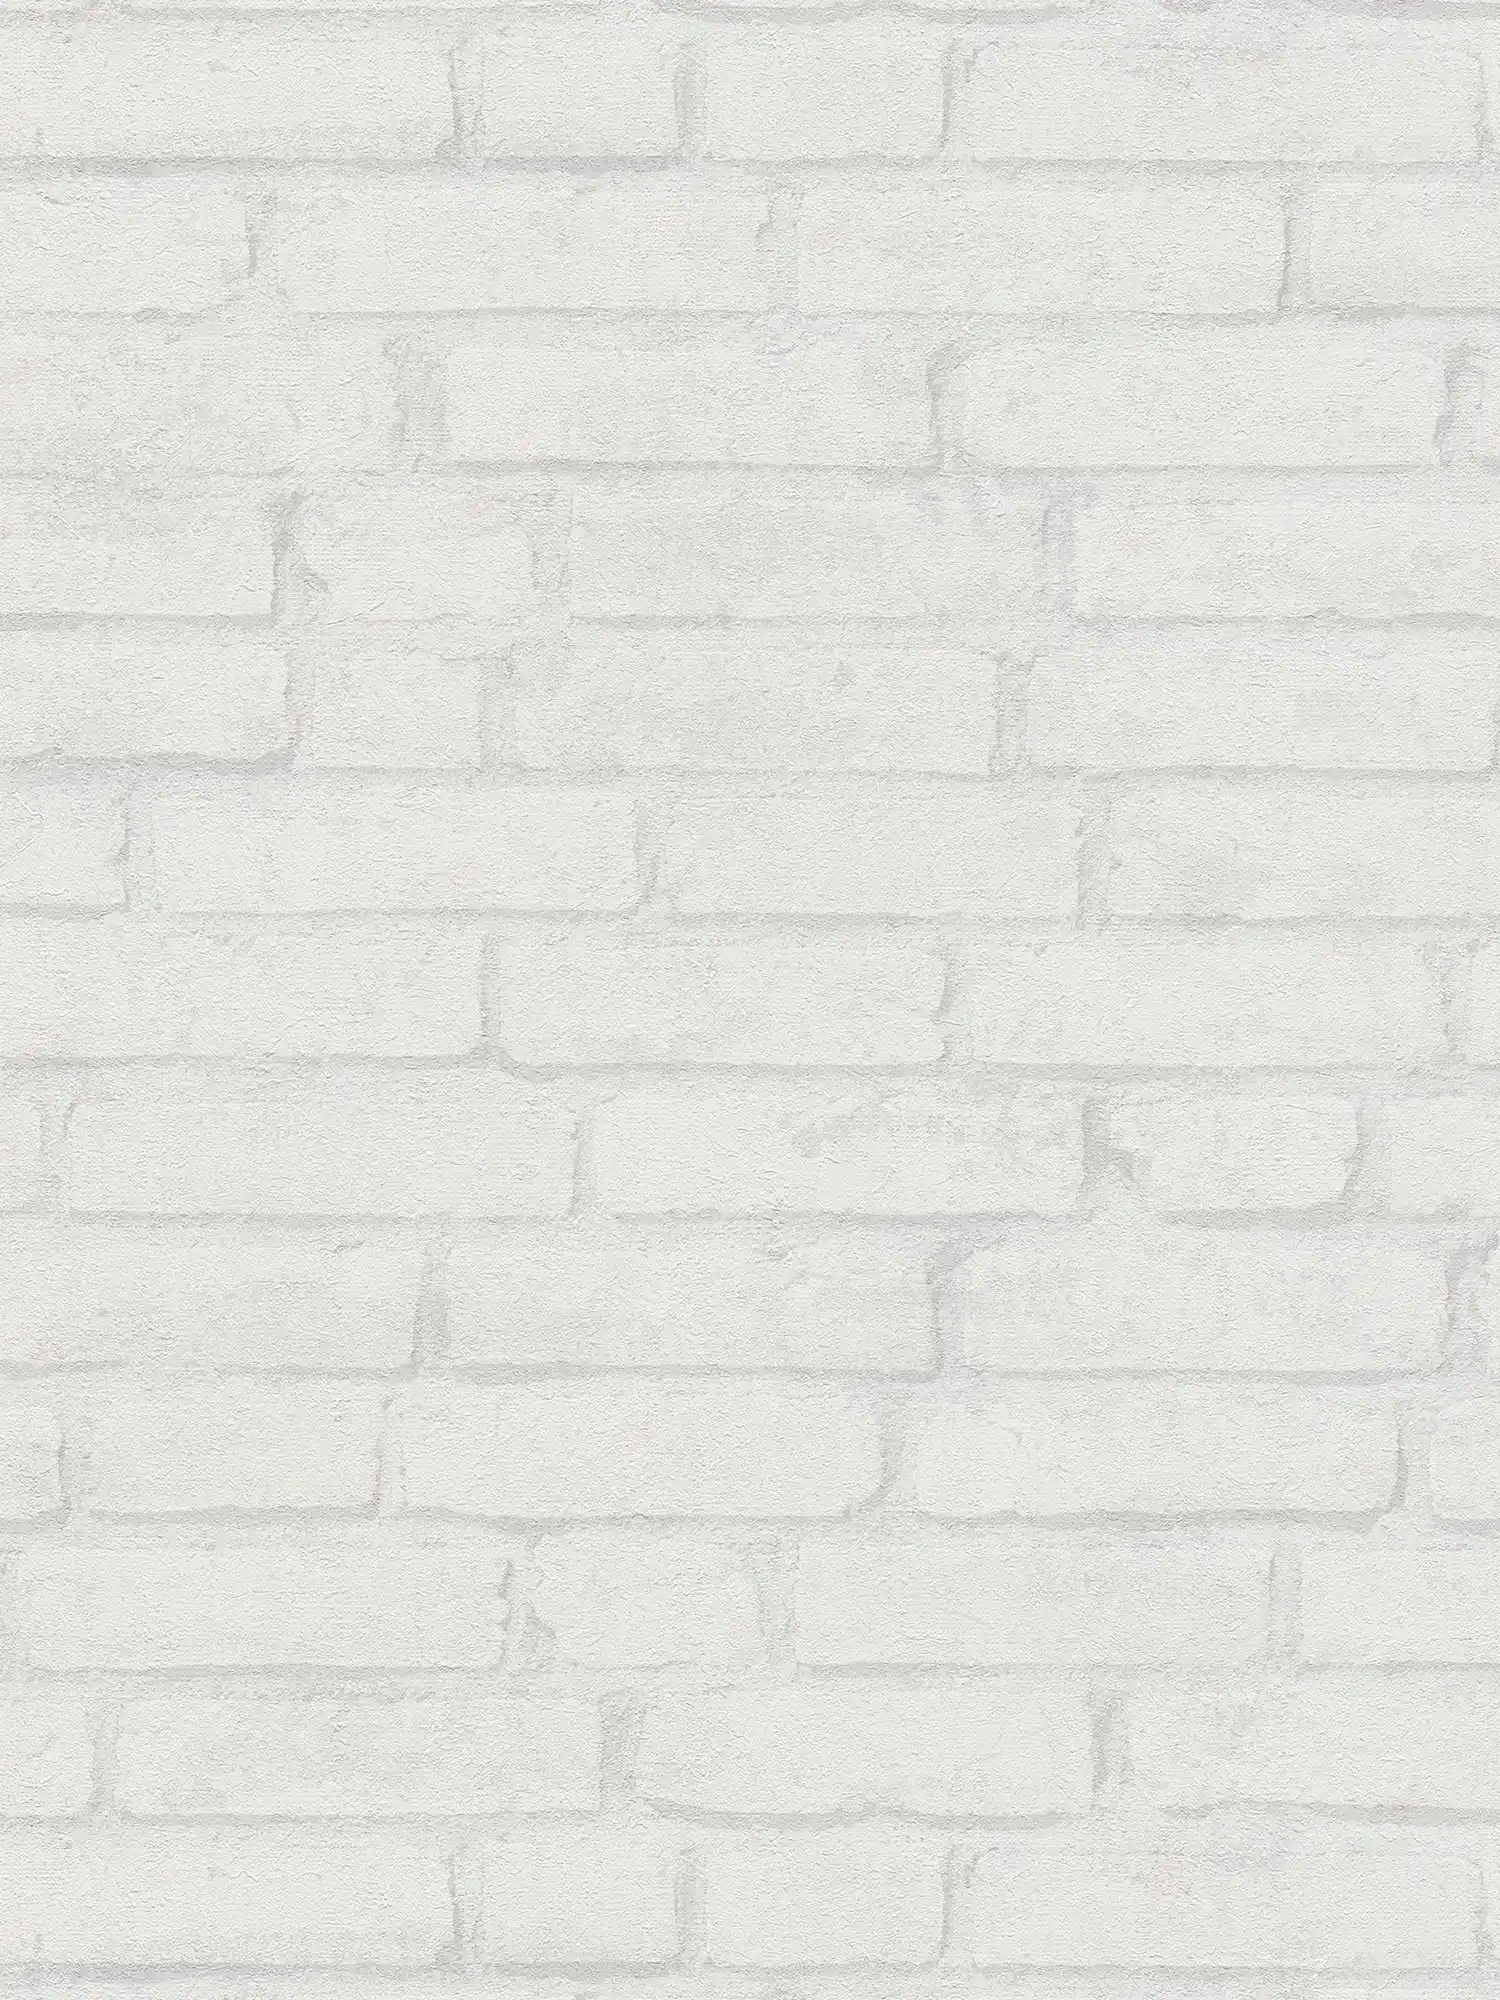 Light stone wallpaper brick pattern in industrial design - white, grey
